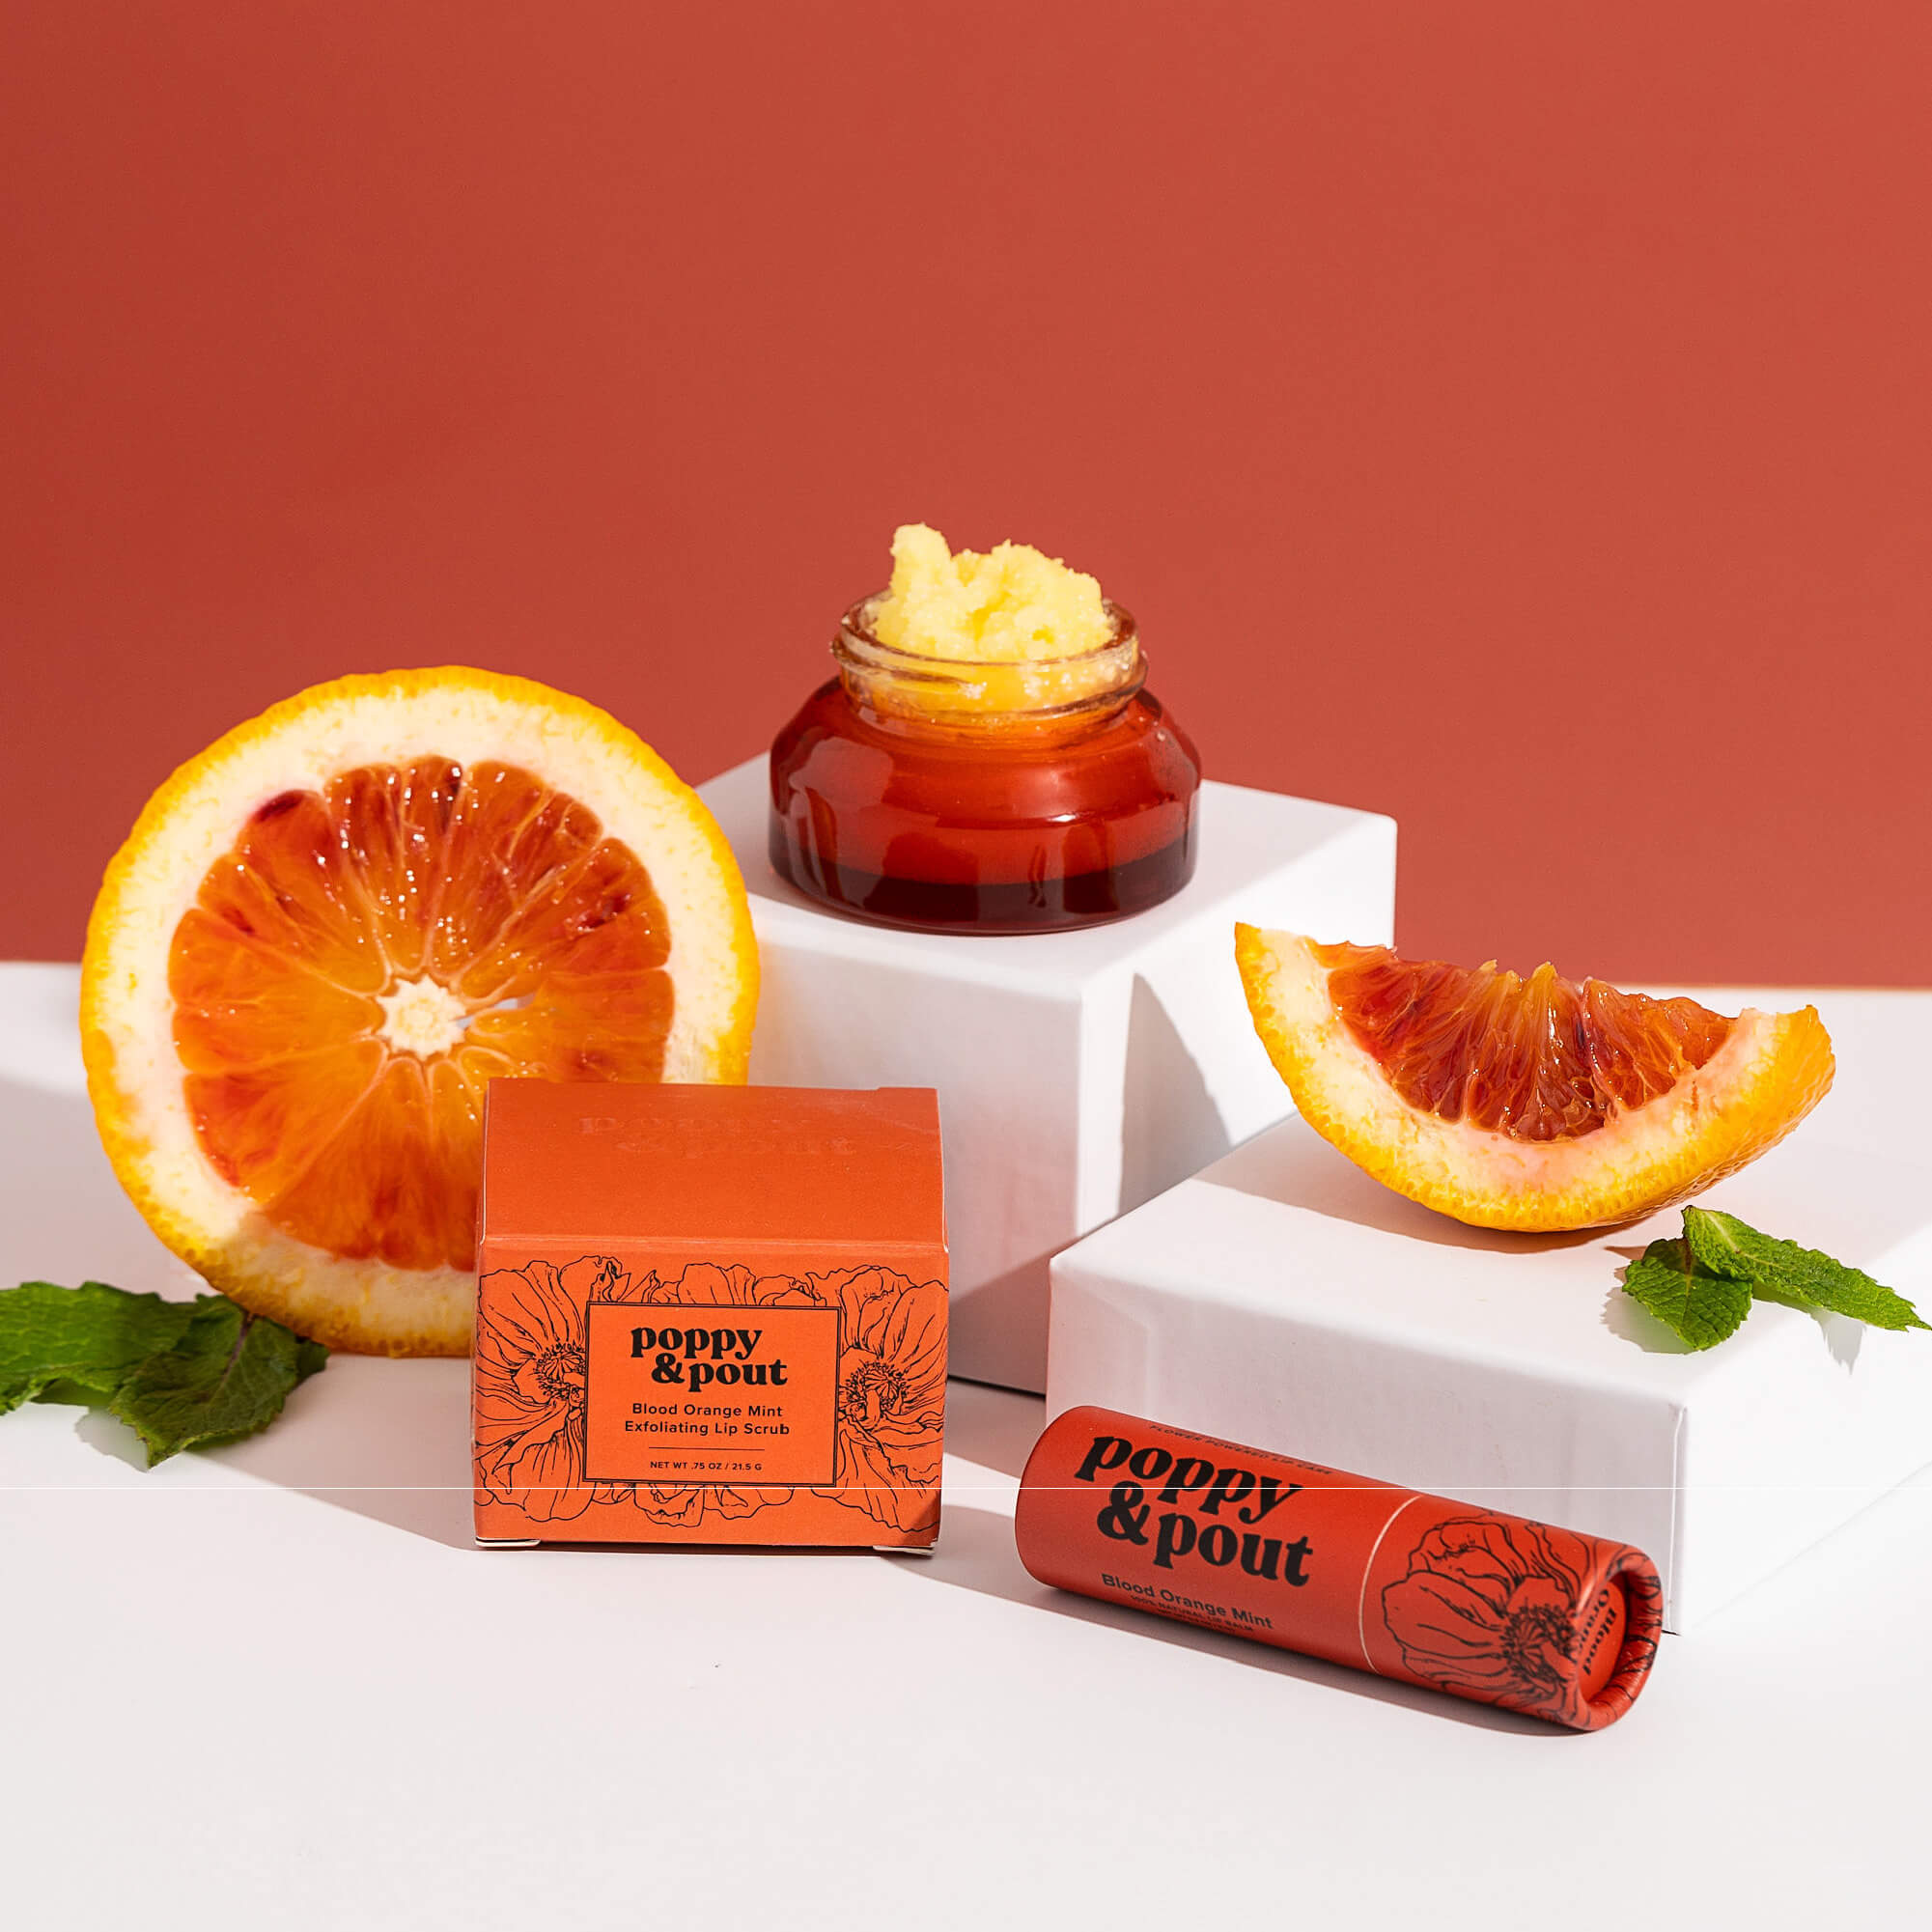 Gift Set, Lip Care Duo, Blood Orange Mint - Poppy & Pout